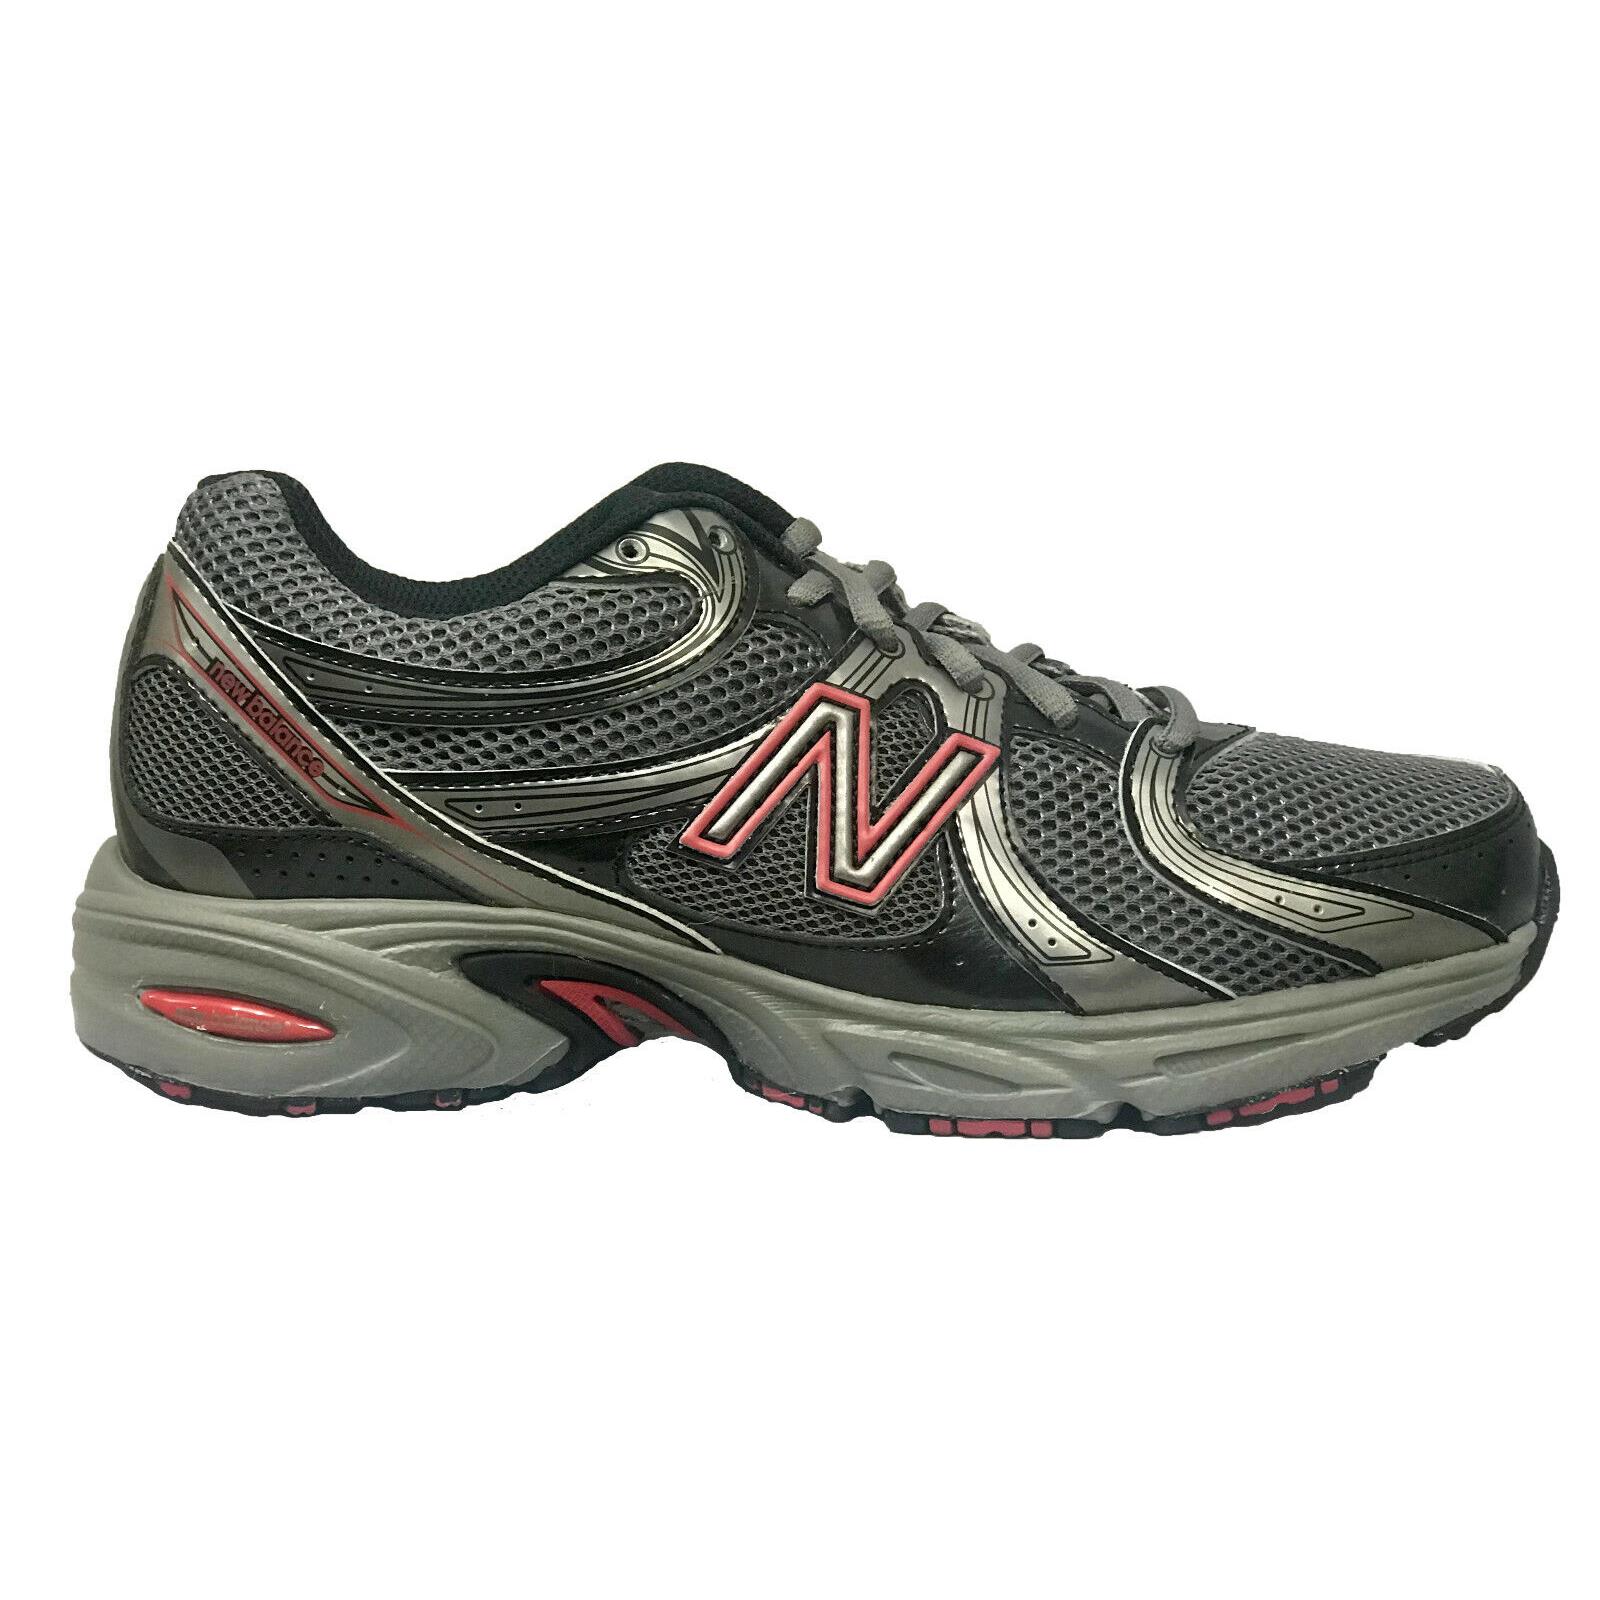 Balance Grey Running Shoes US Mens Size 7.0 MR470GBR